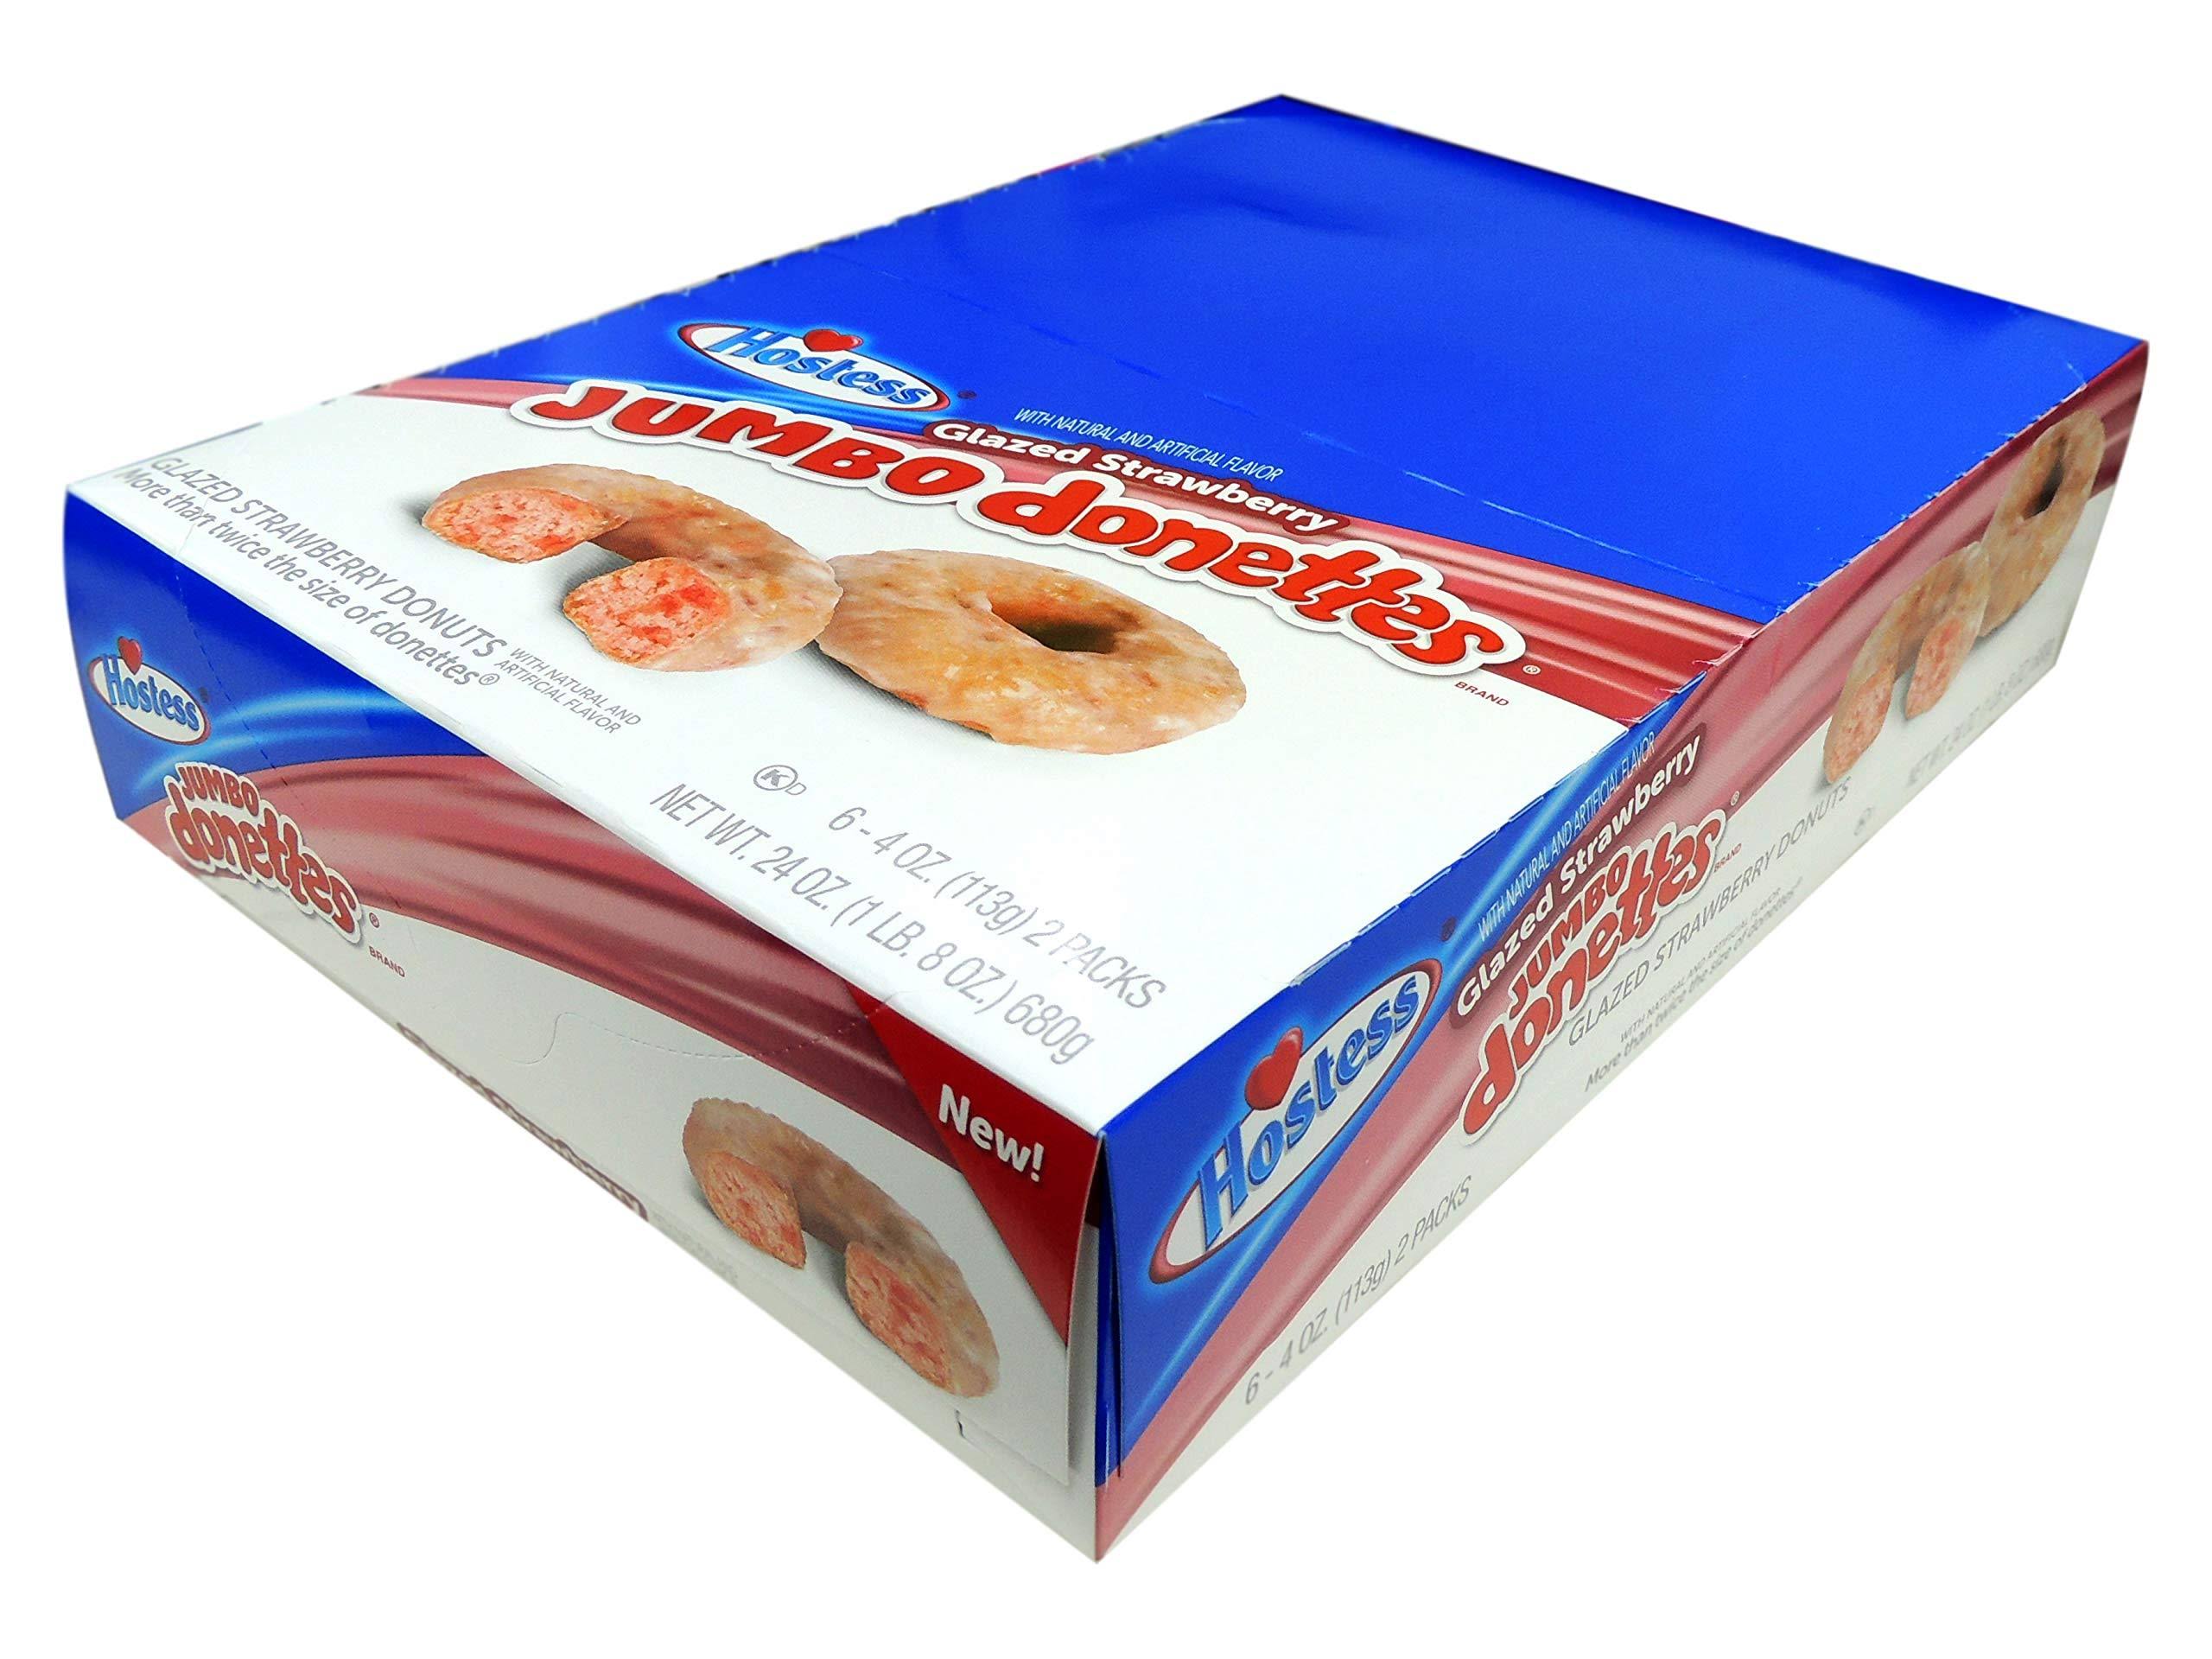 Hostess Jumbo Donettes Donuts, Glazed Strawberry - 6 pack, 4 oz